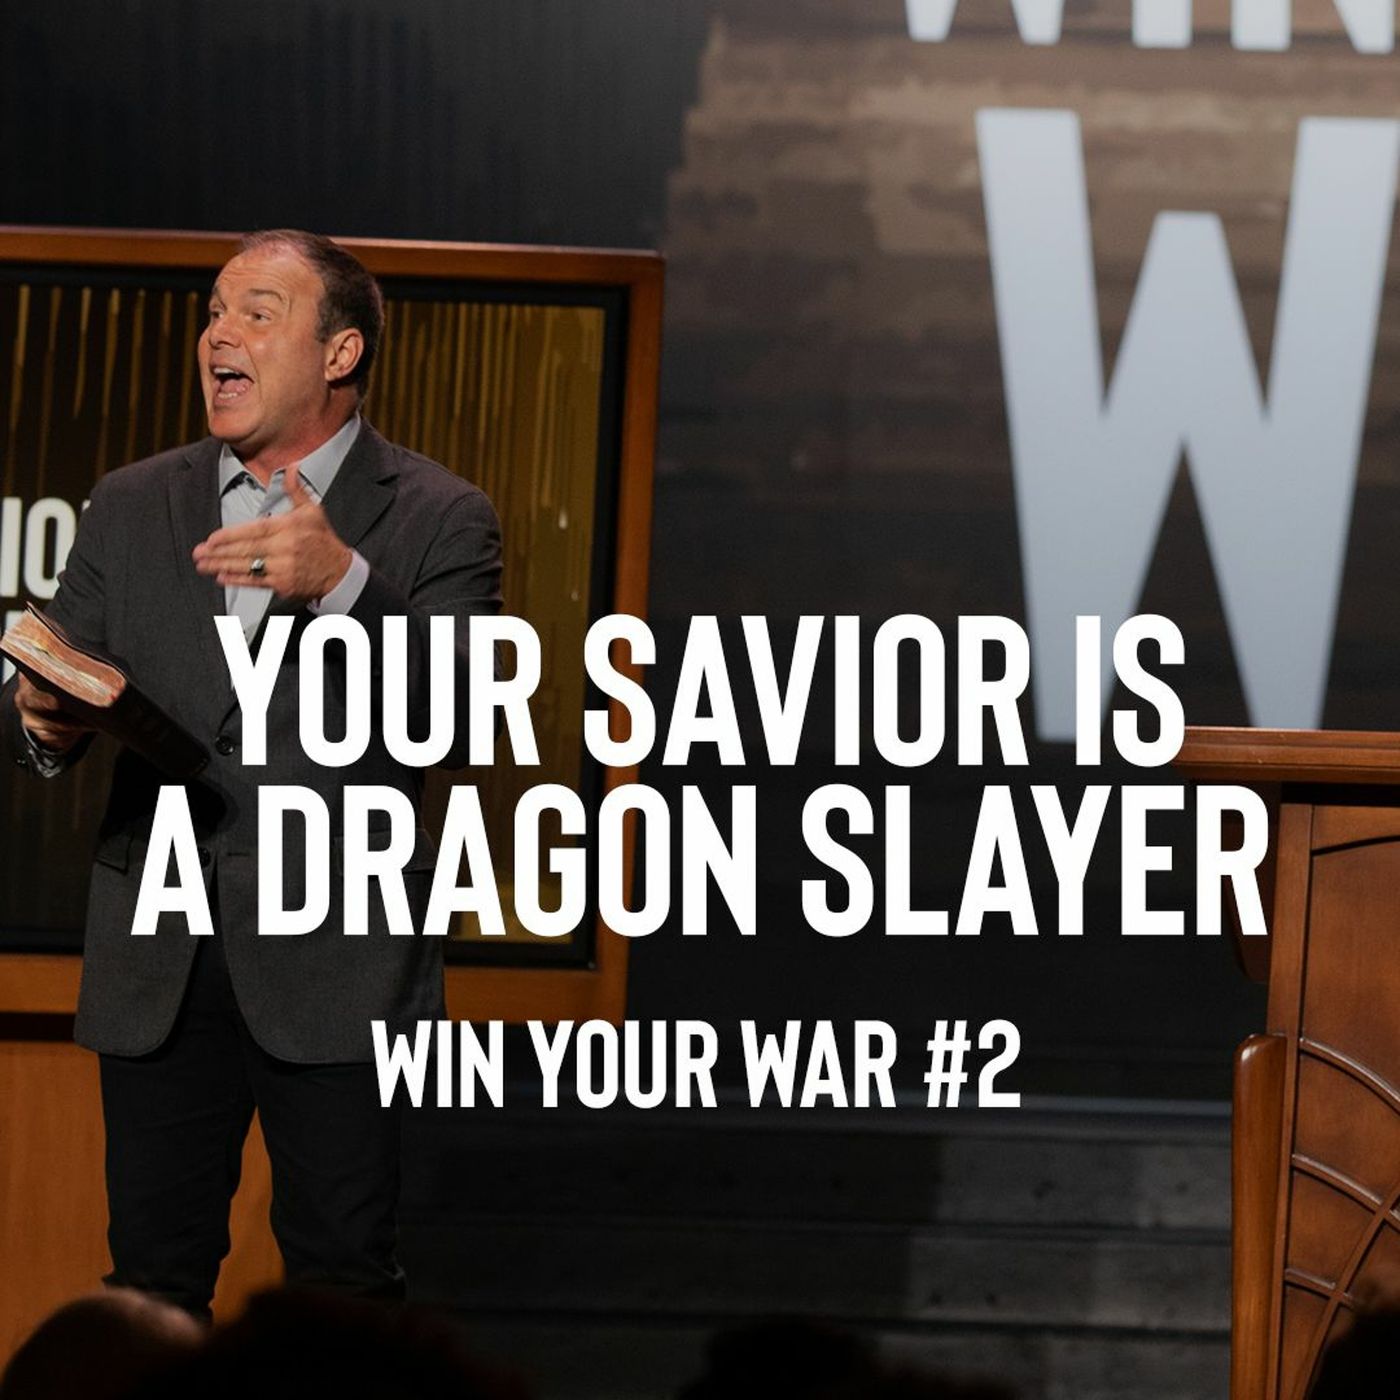 Win Your War #2 - Your Savior is a Dragon Slayer